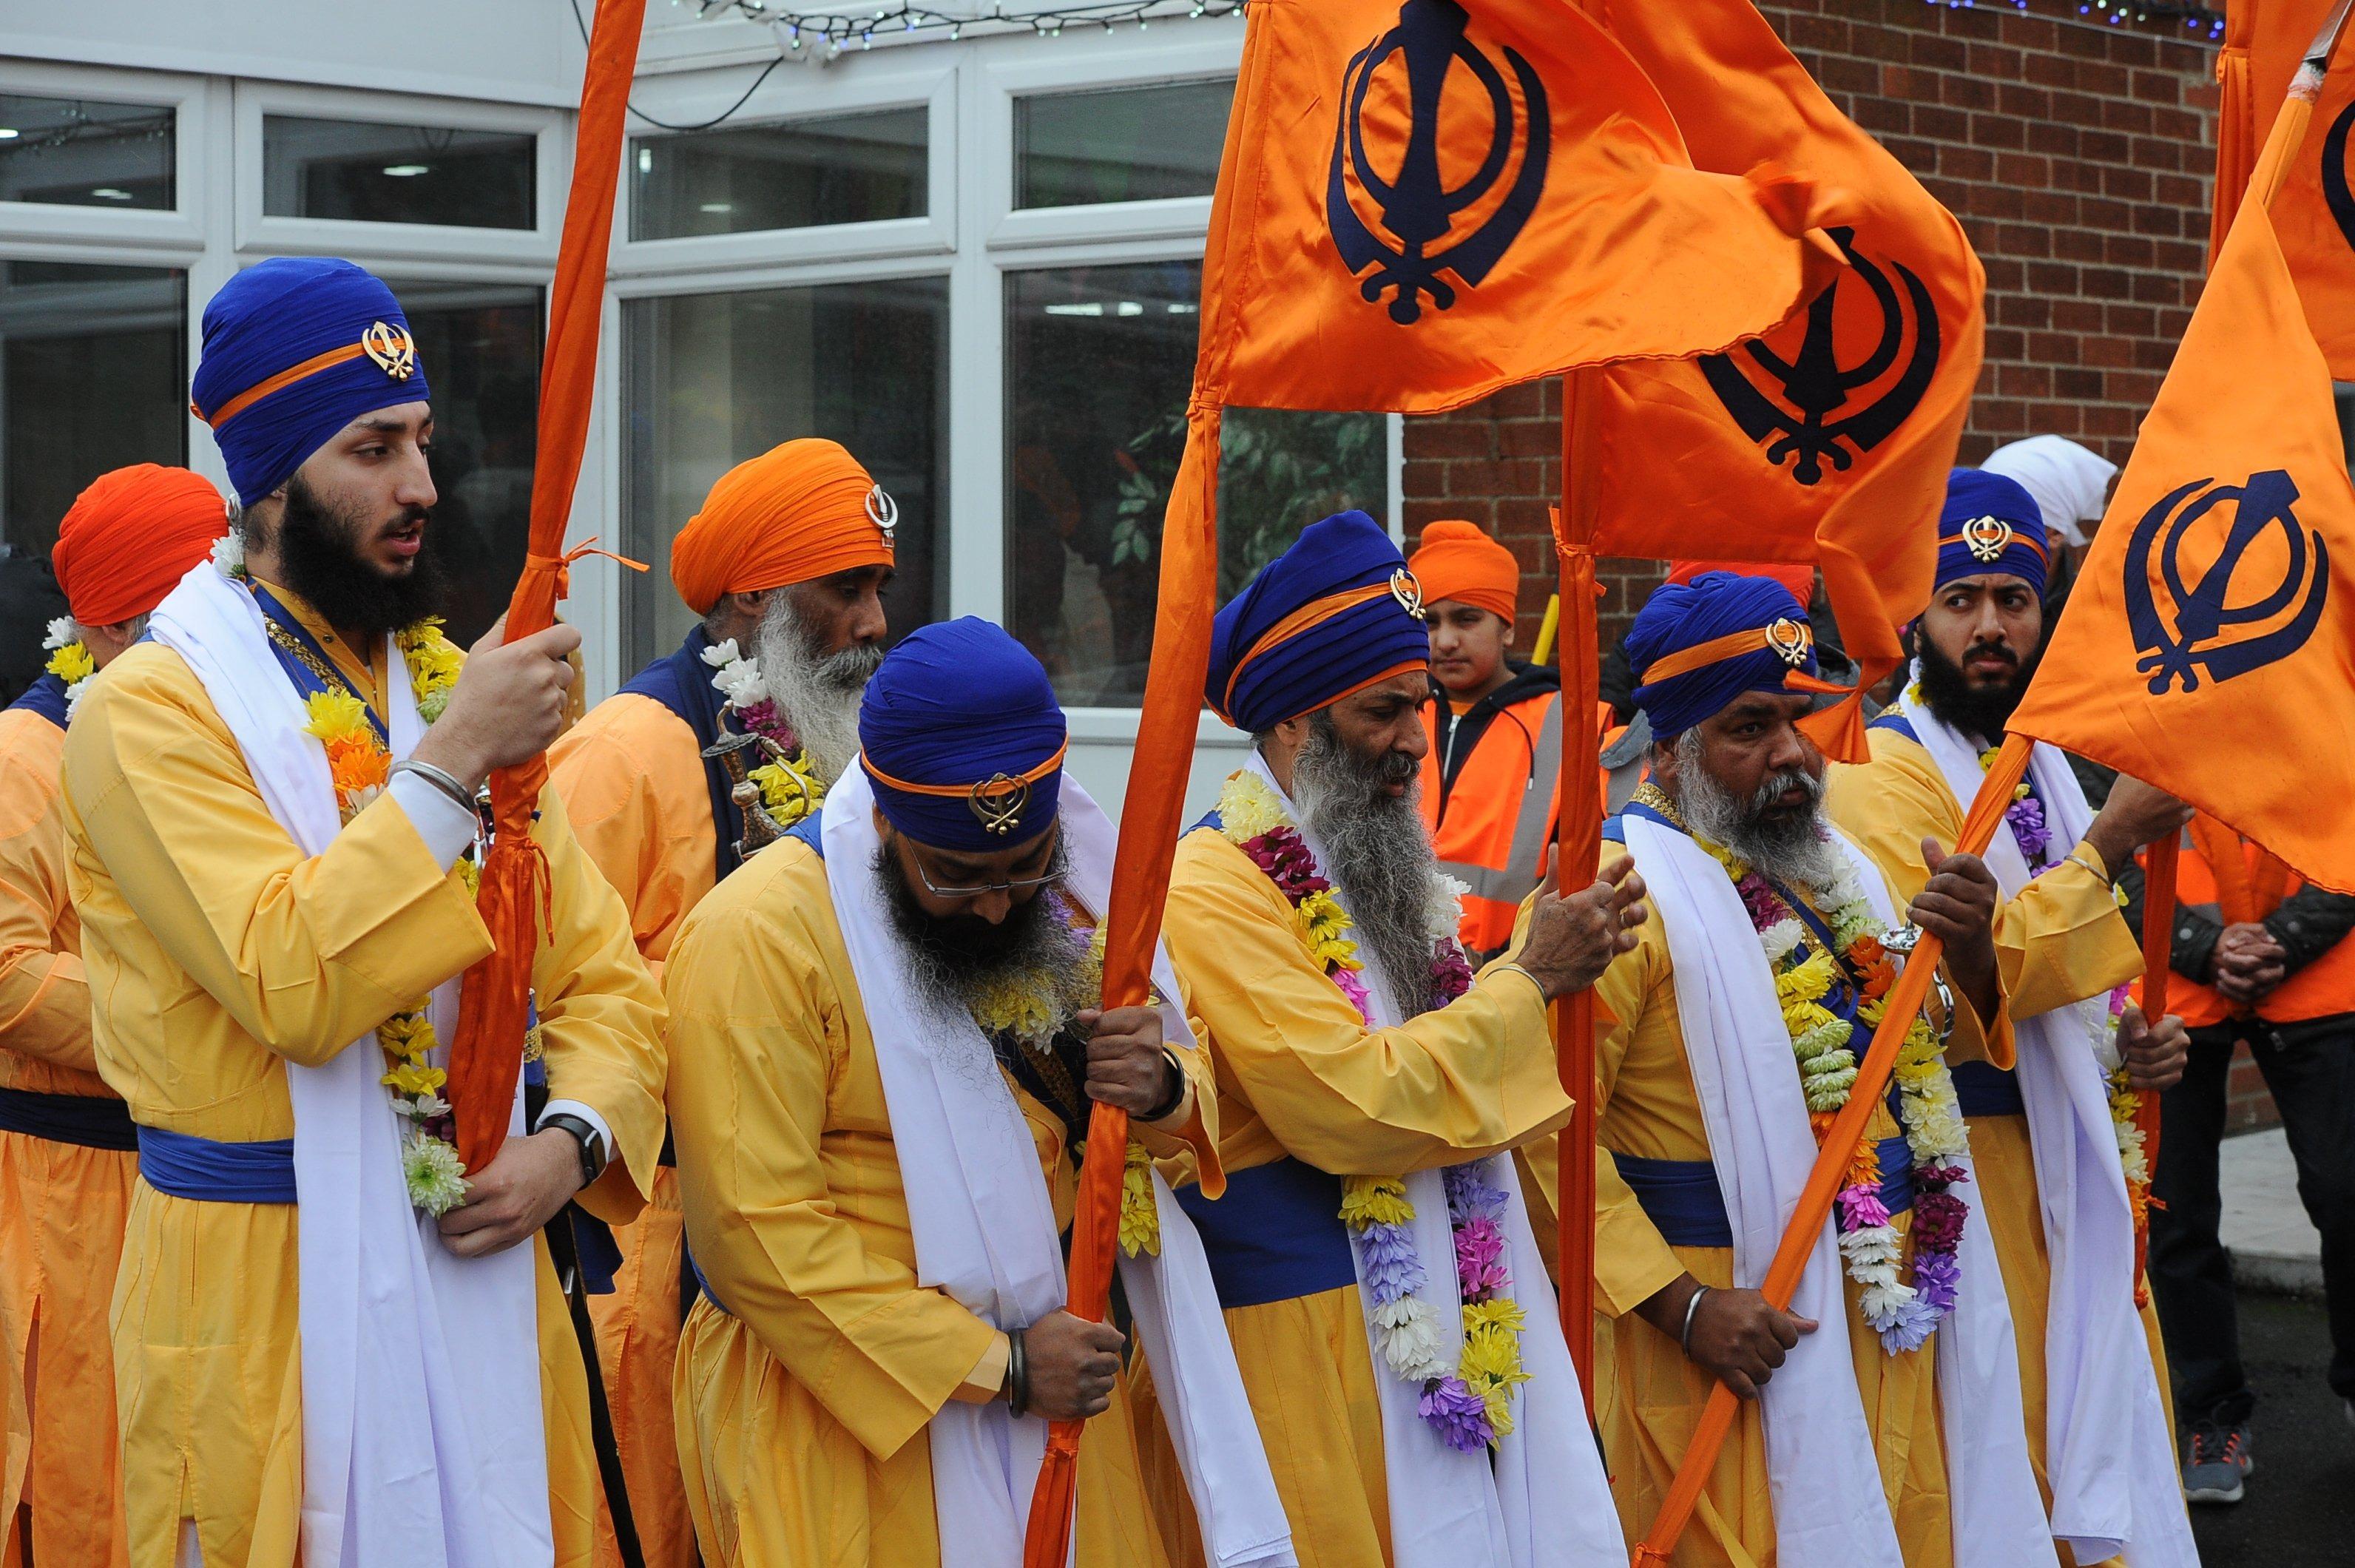 Peterborough Sikh Parade 2019 from the Gurdwara Baba Budha Sahib Temple at Royce Road to Sri Guru Singh Gurdwara Temple at Newark Road EMN-190211-213419009